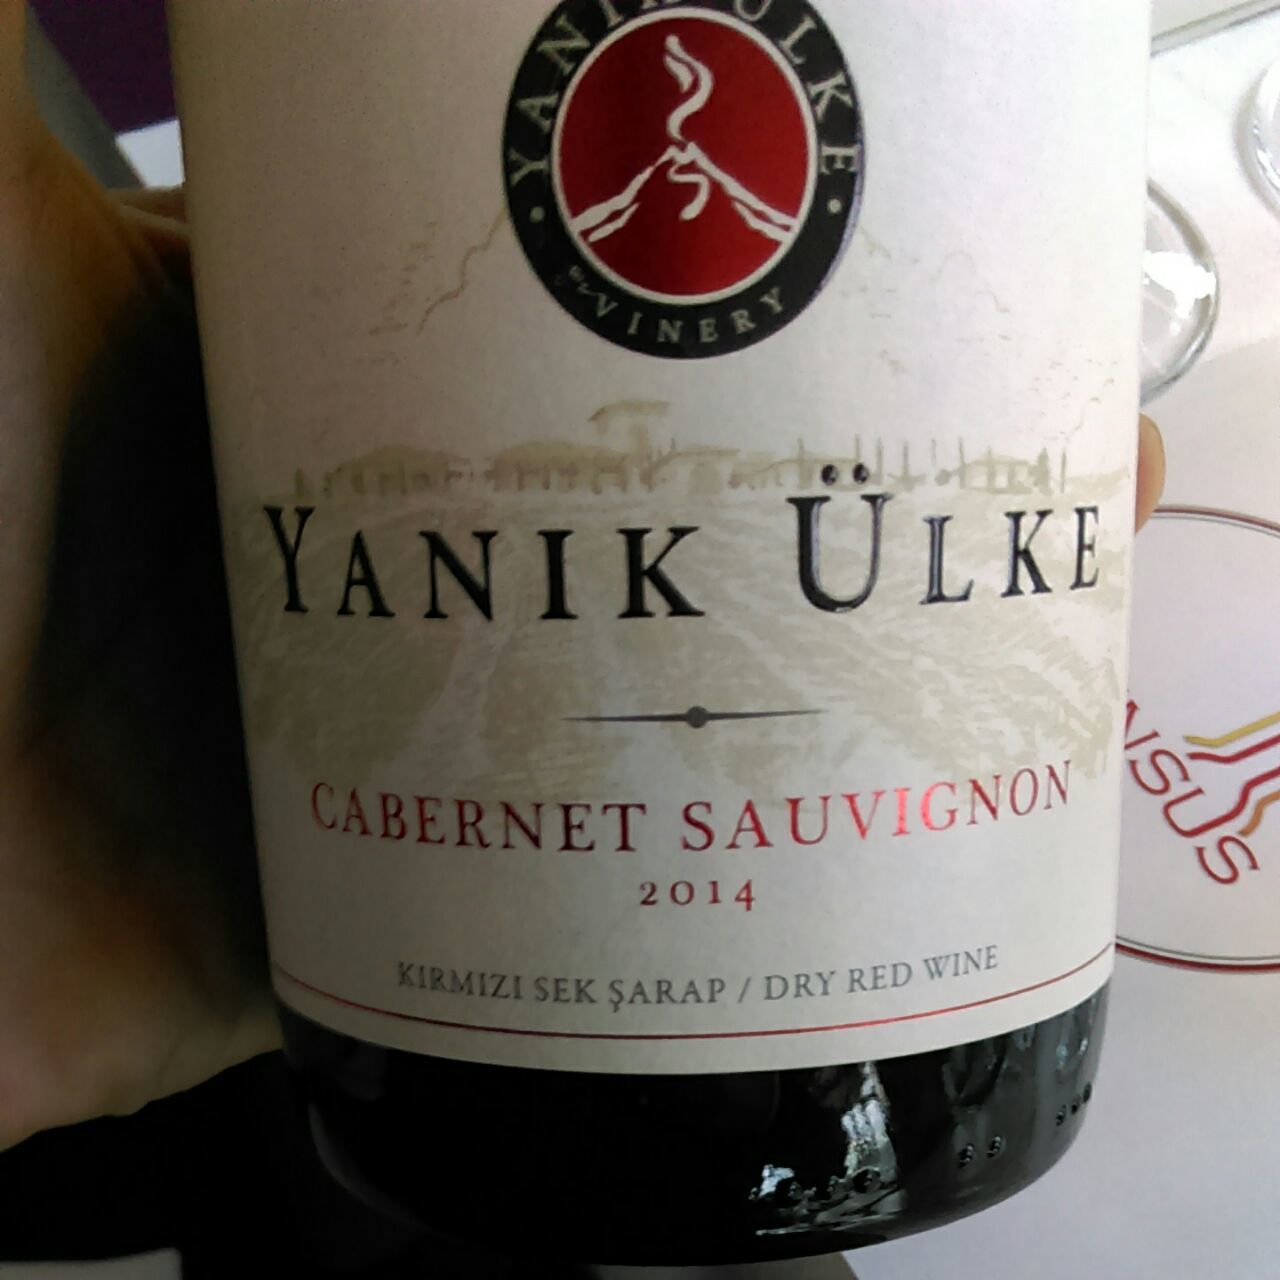 Усадьба александровская каберне совиньон. Yanik ulke вино. Агора Каберне Совиньон. Каберне Совиньон Массандра. Вино Santa digna Cabernet Sauvignon.